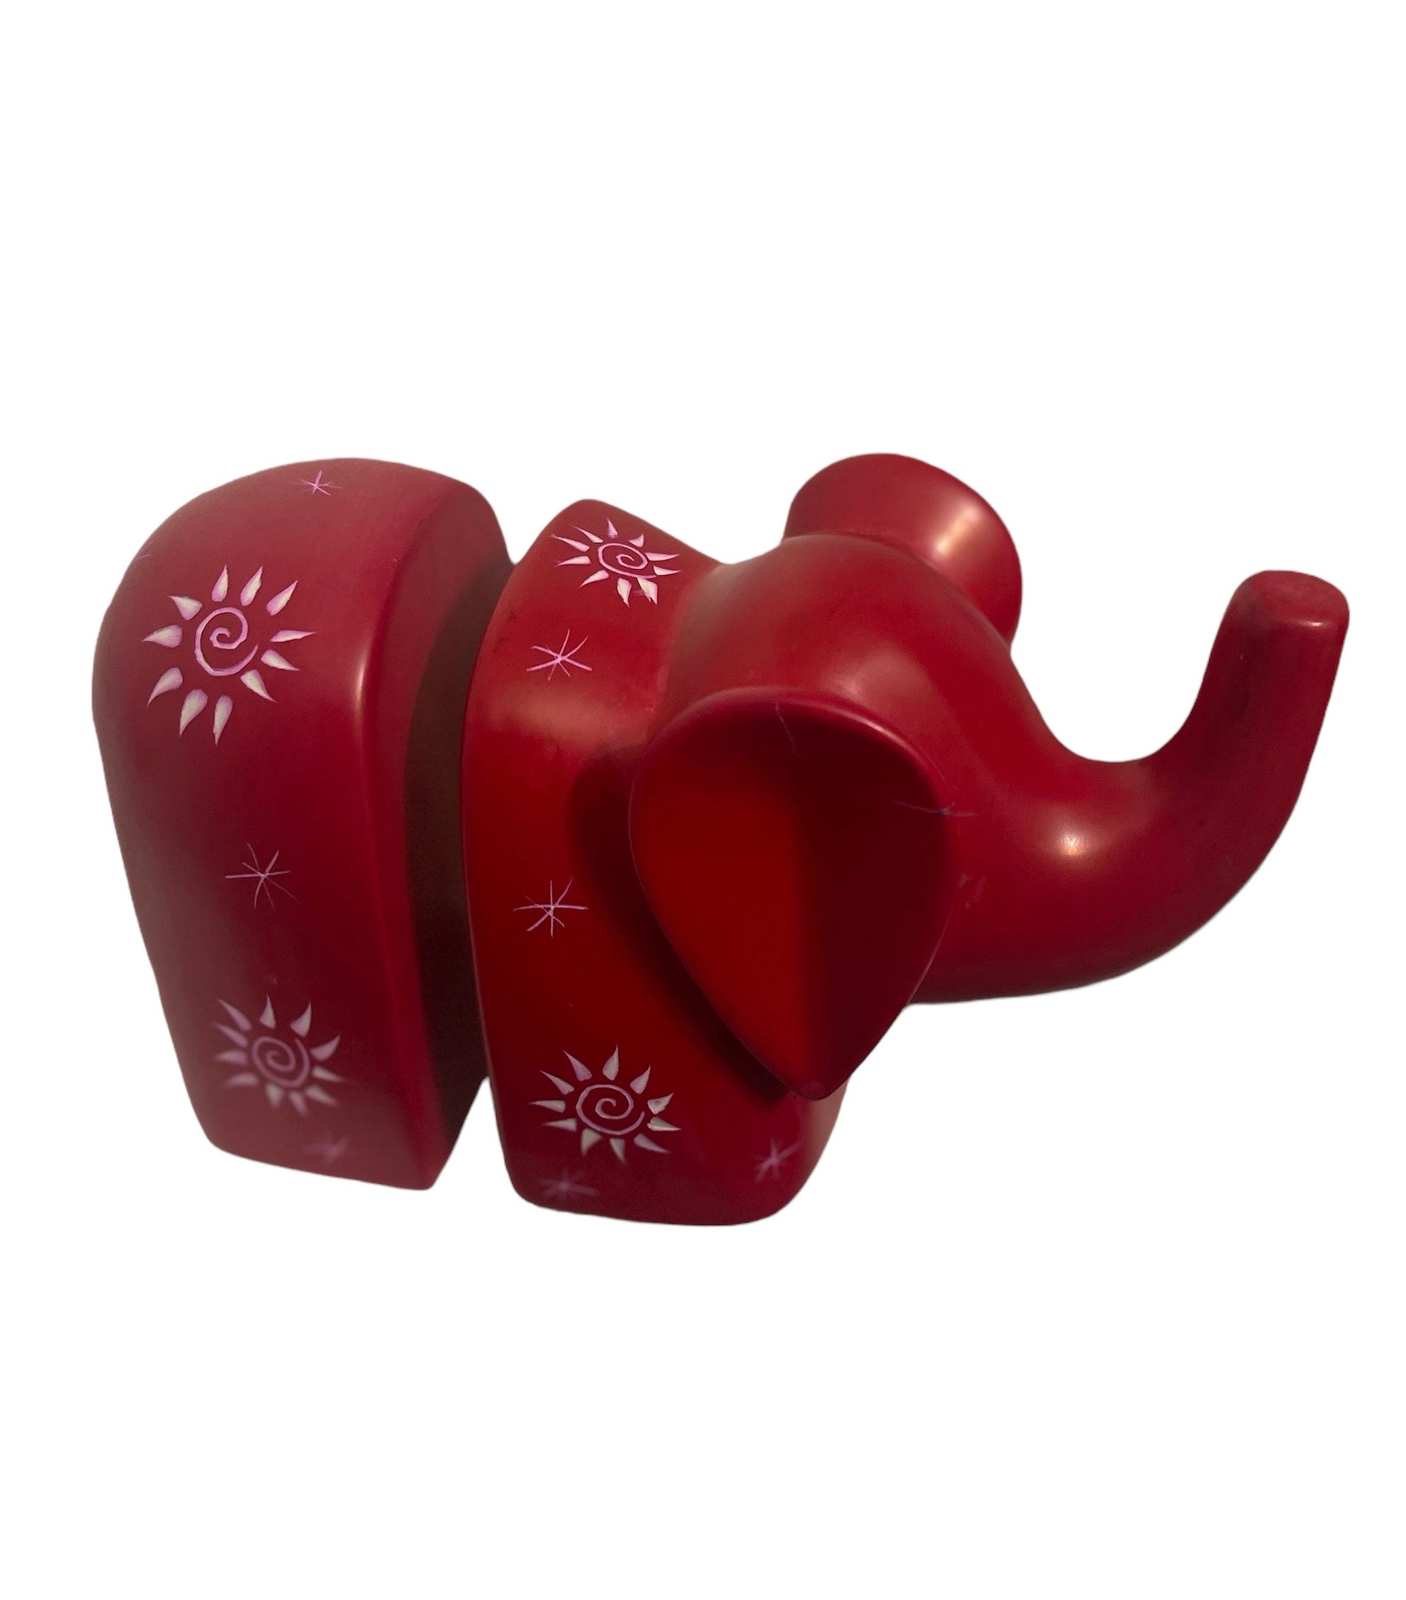 Soapstone Elephant Bookends - $45.99